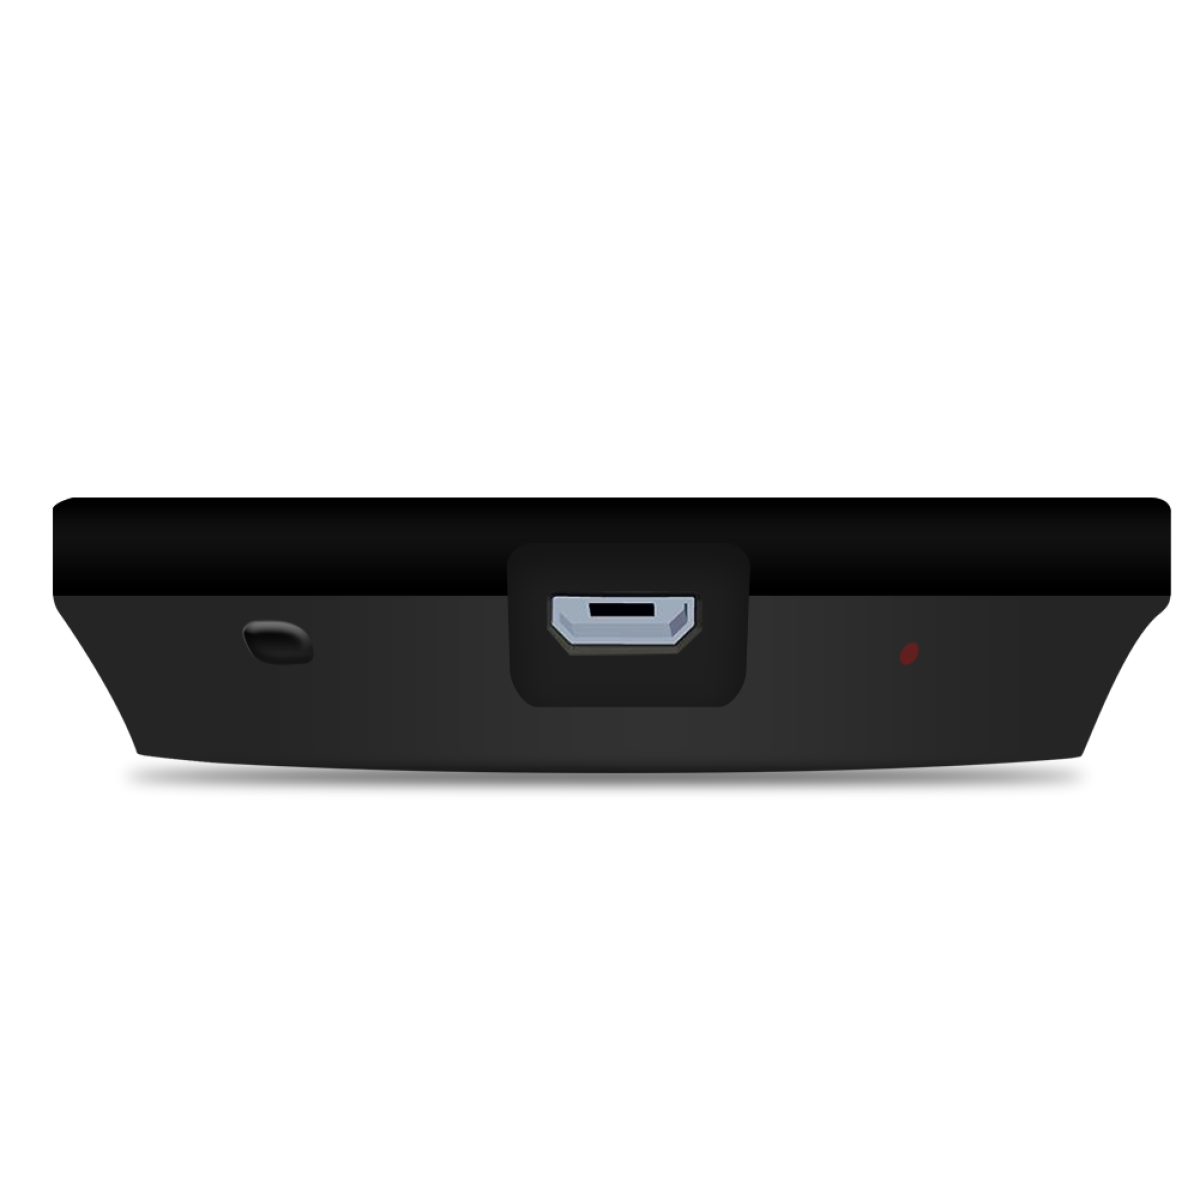 HDMI-Dongle-Empfänger HDMI INF 2.4G/5G Empfänger Kabelloser 1080P Dongle